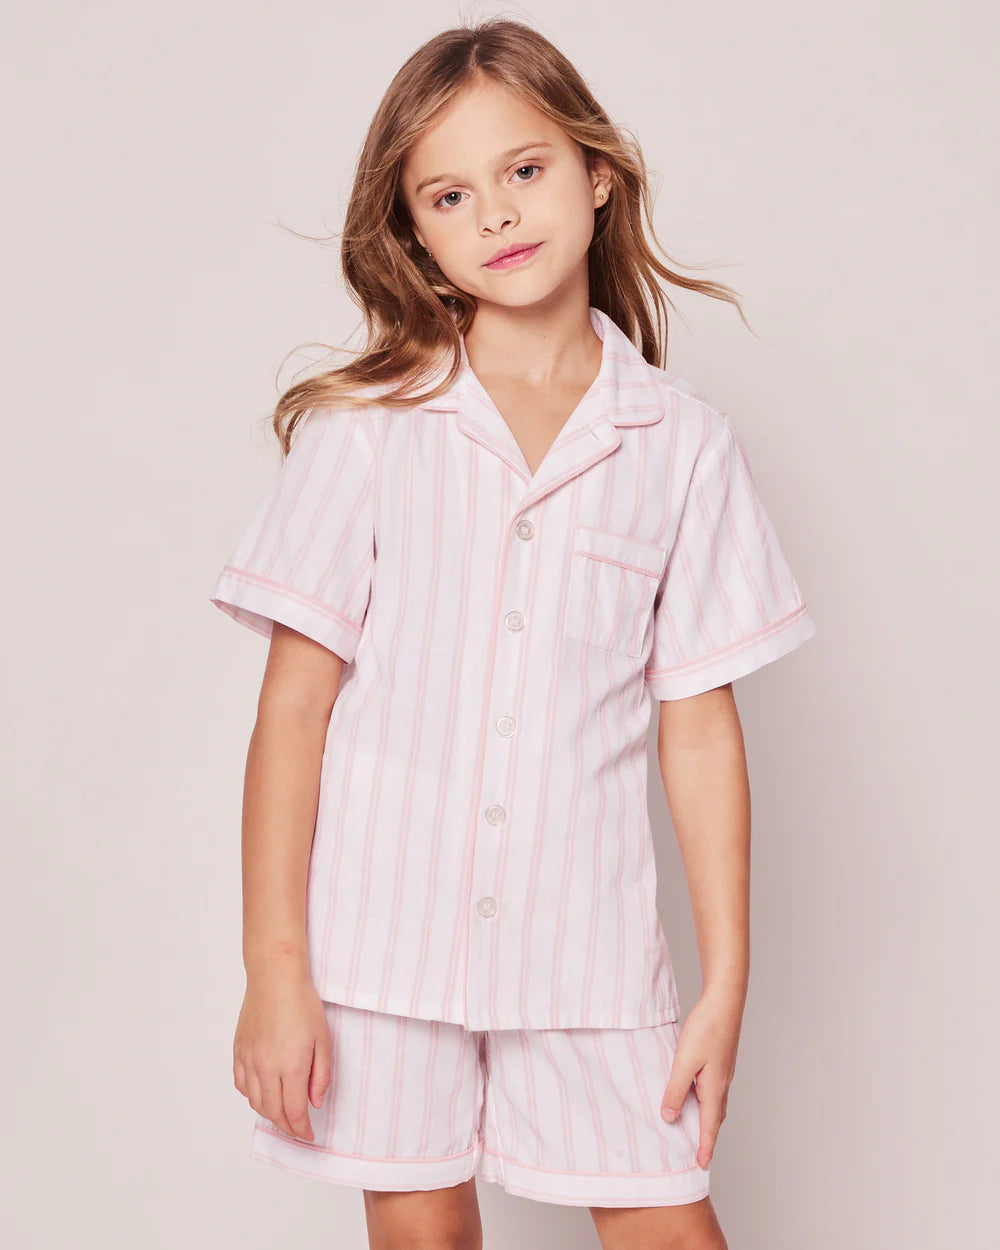 Petite Plume Children's Pink and White Stripe Short Set